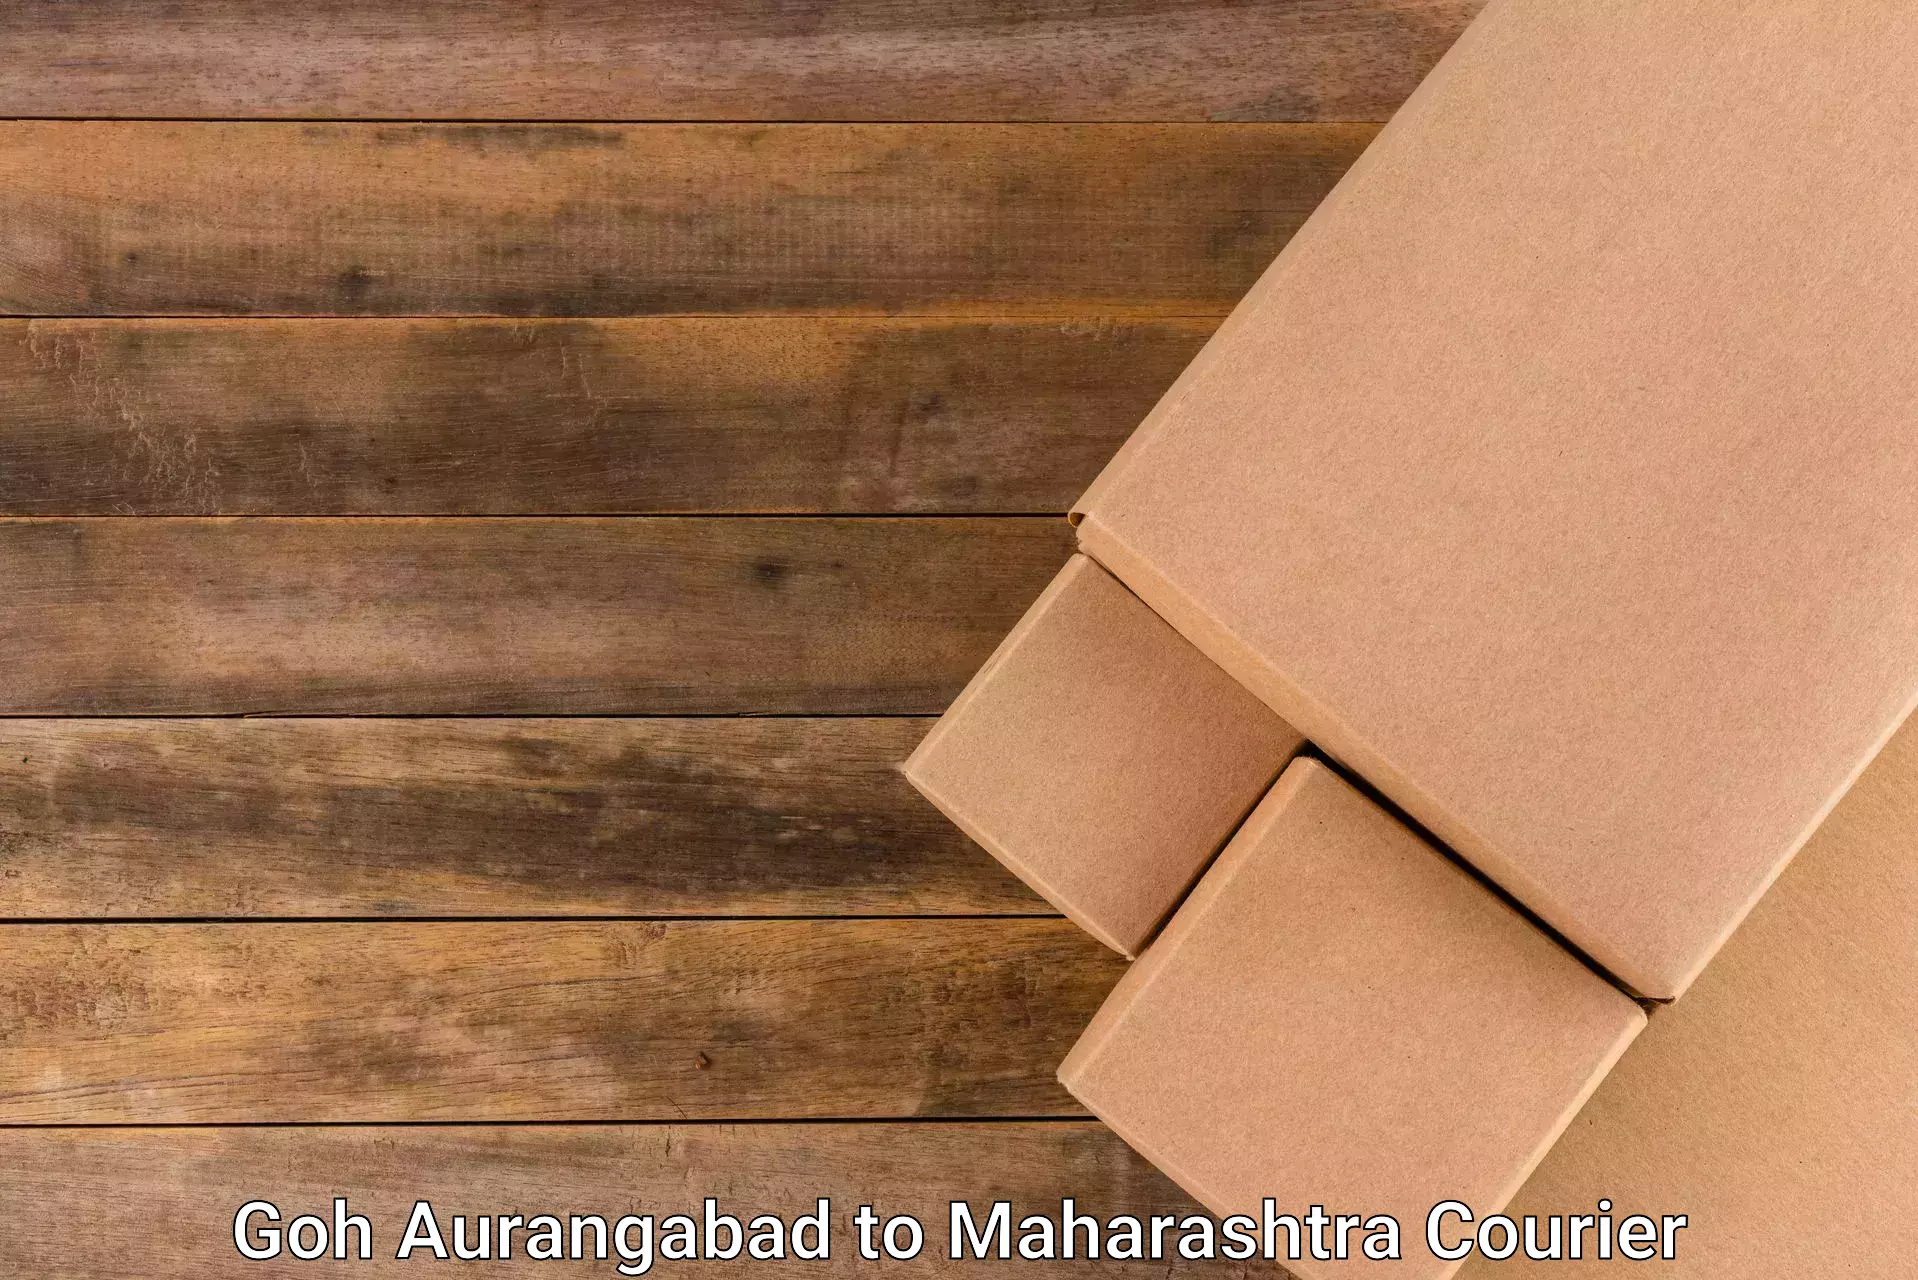 Delivery service partnership Goh Aurangabad to Maharashtra